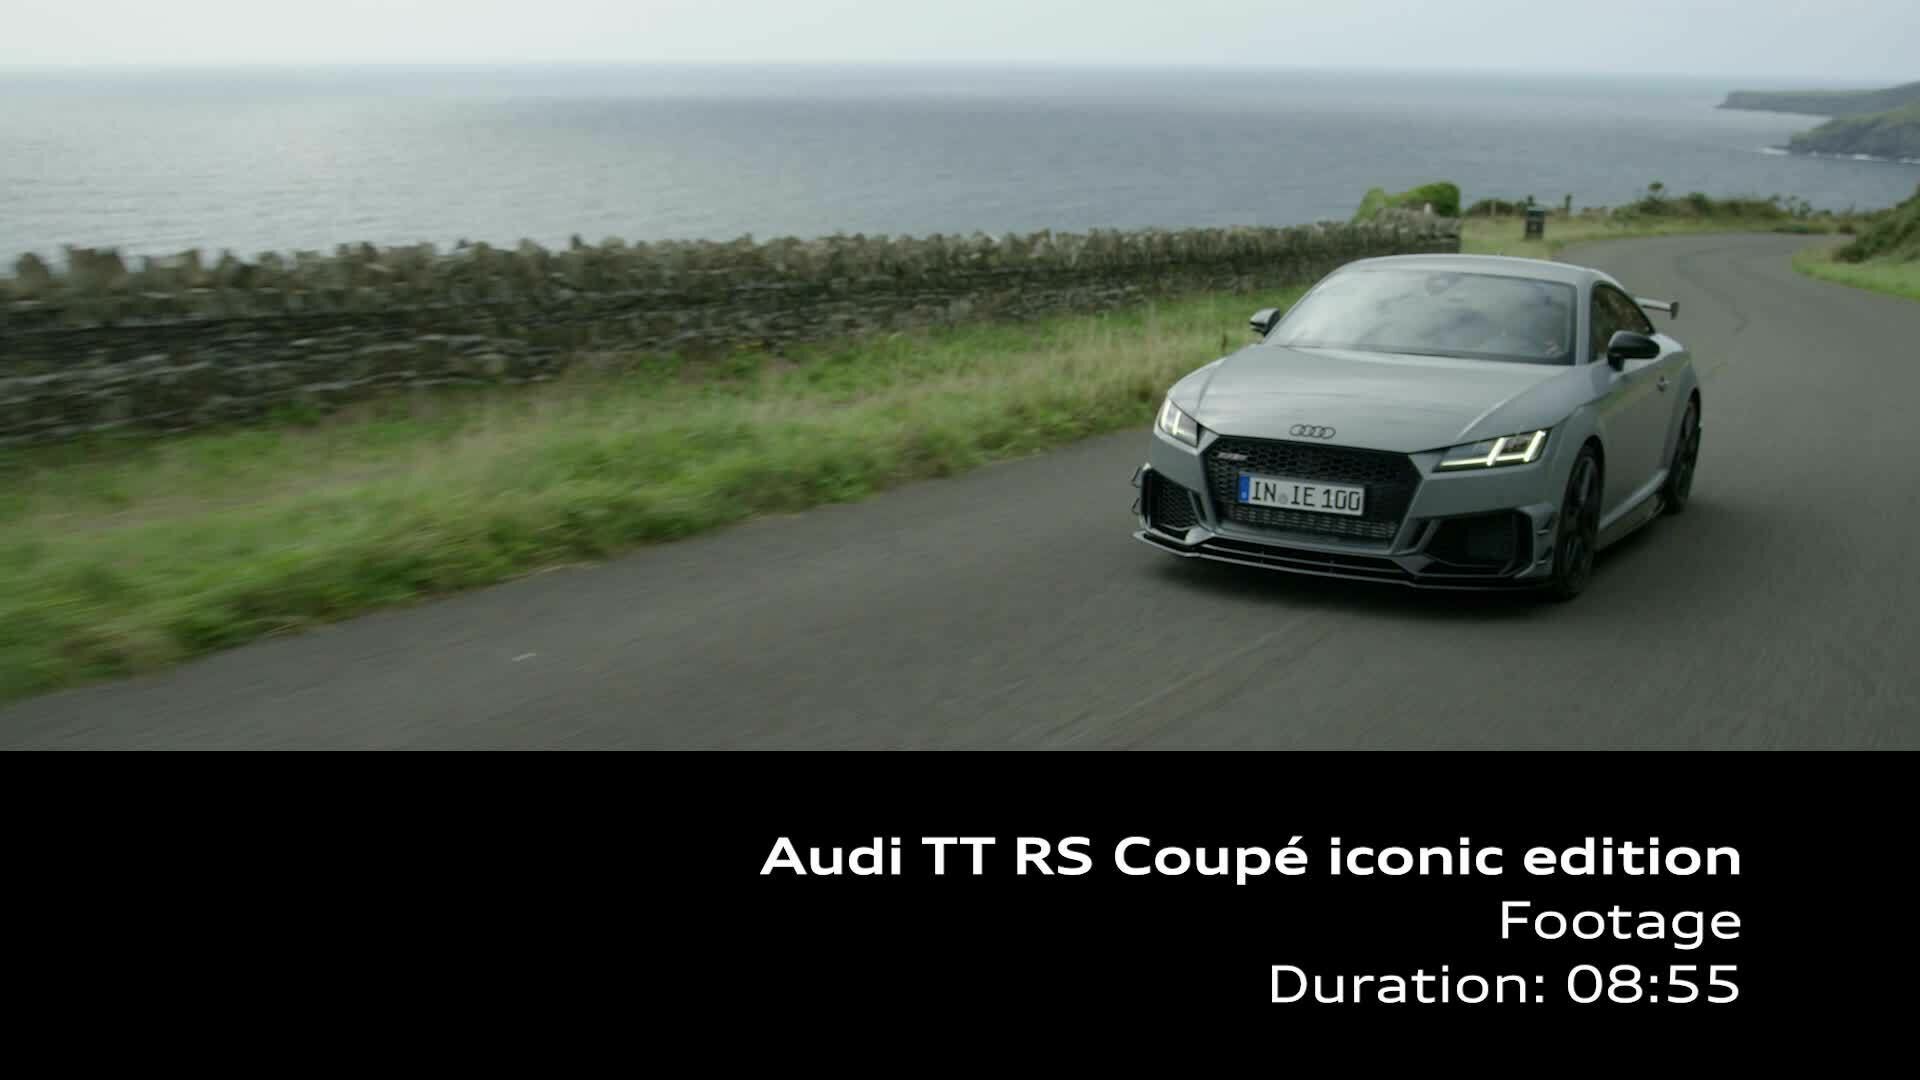 Footage: Audi TT RS Coupé iconic edition